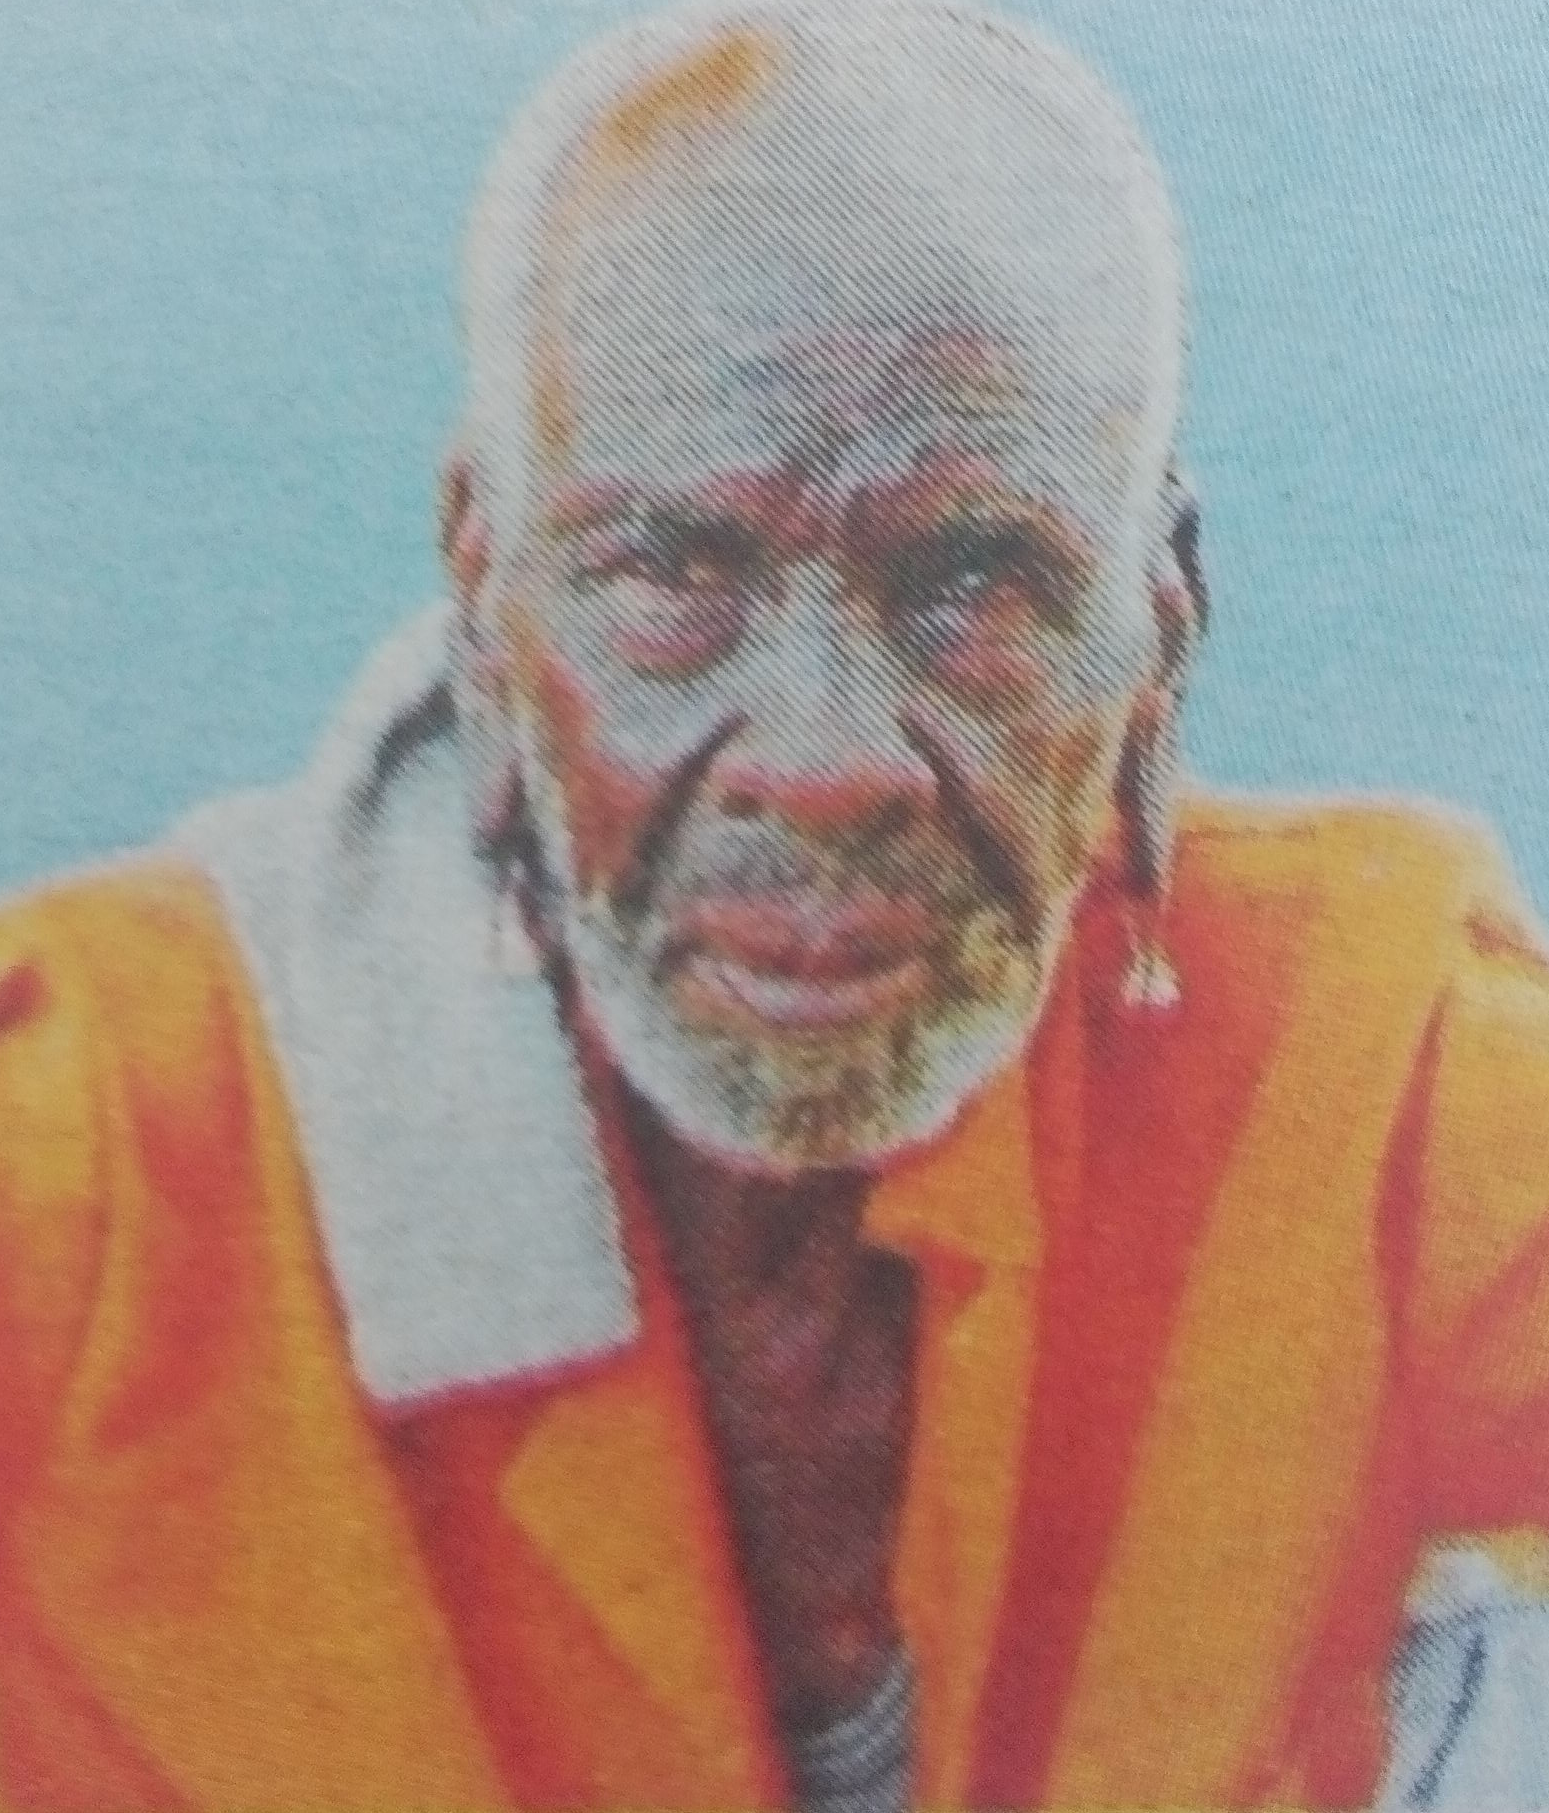 Obituary Image of Mzee Ruto Chepkurui (Arap Moi)